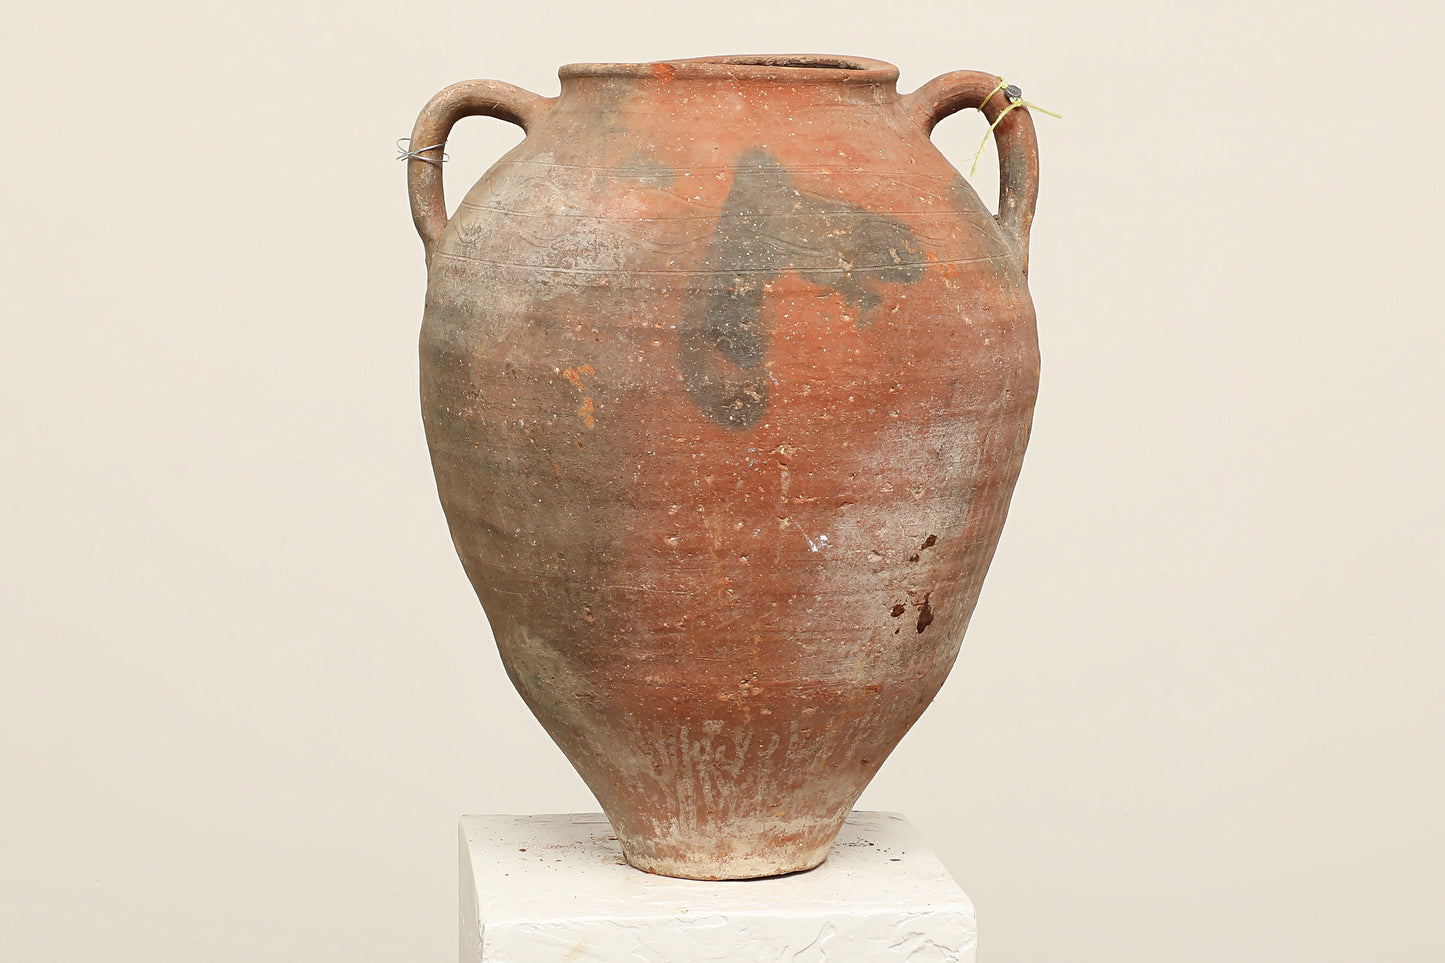 (IWB308) Vintage Turkish Pot (16x16x22)